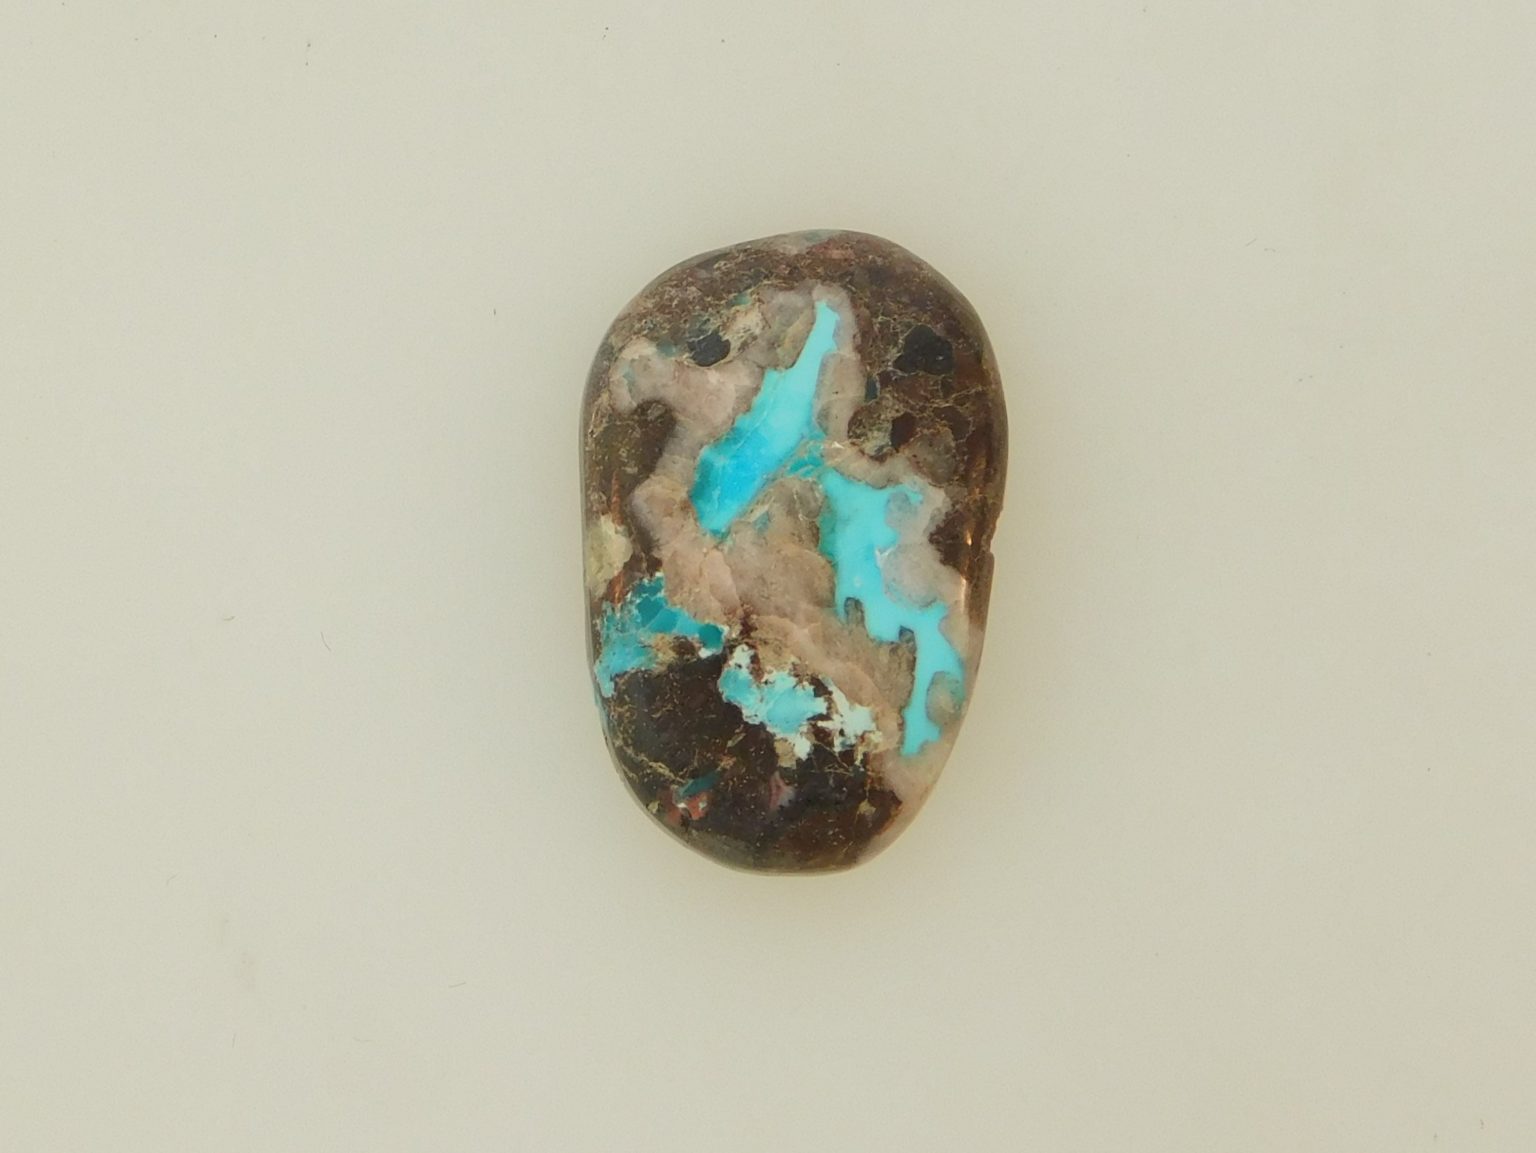 BLUE BISBEE TURQUOISE Streaks in Quartz 15.5 carats